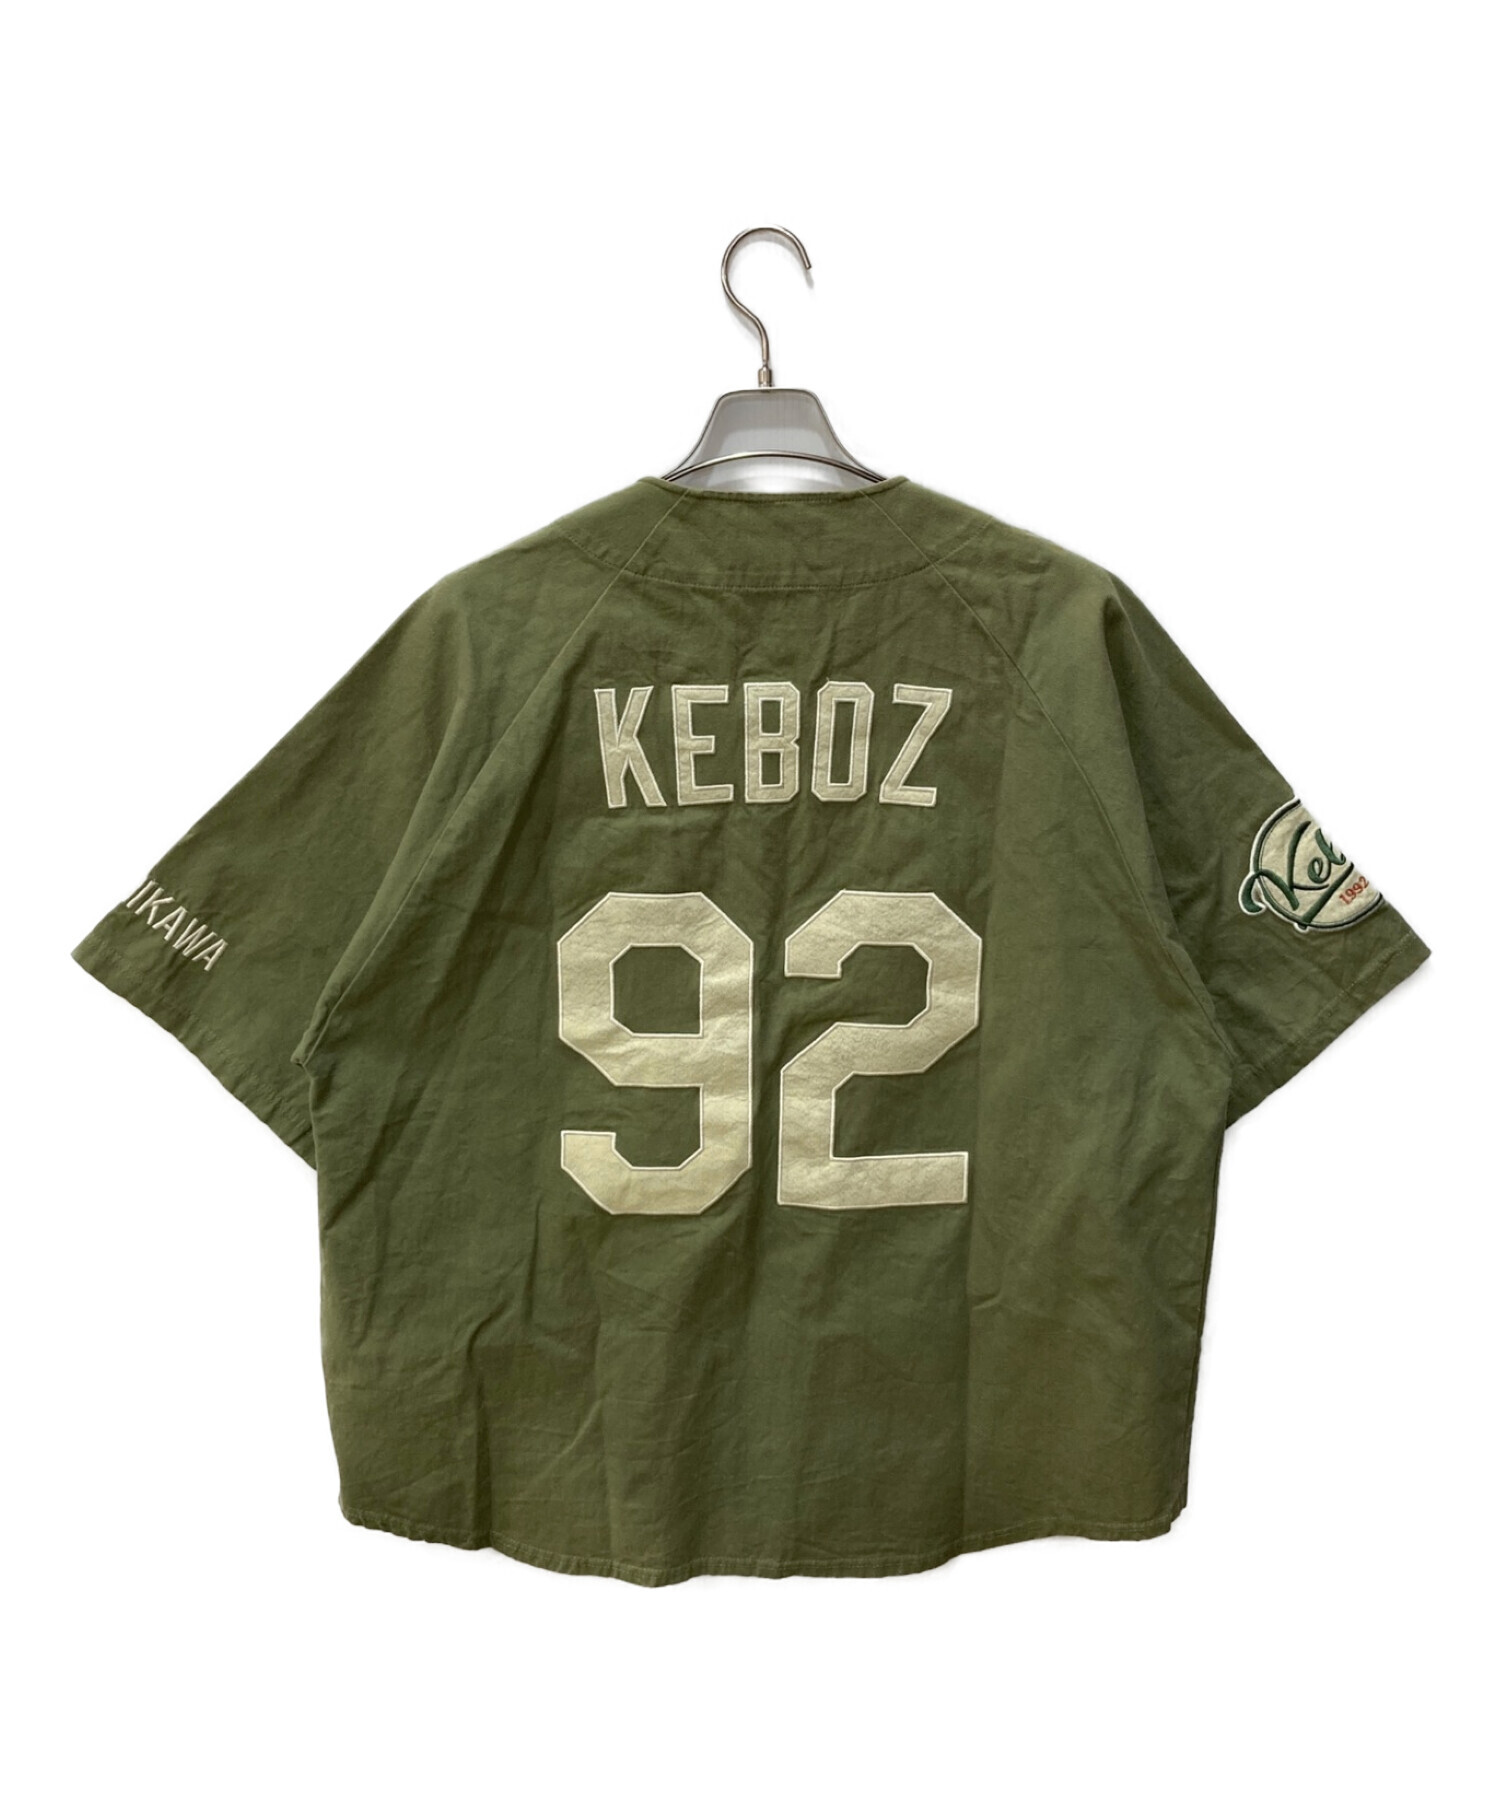 KEBOZ ケボズ ベースボールシャツ カーキ-